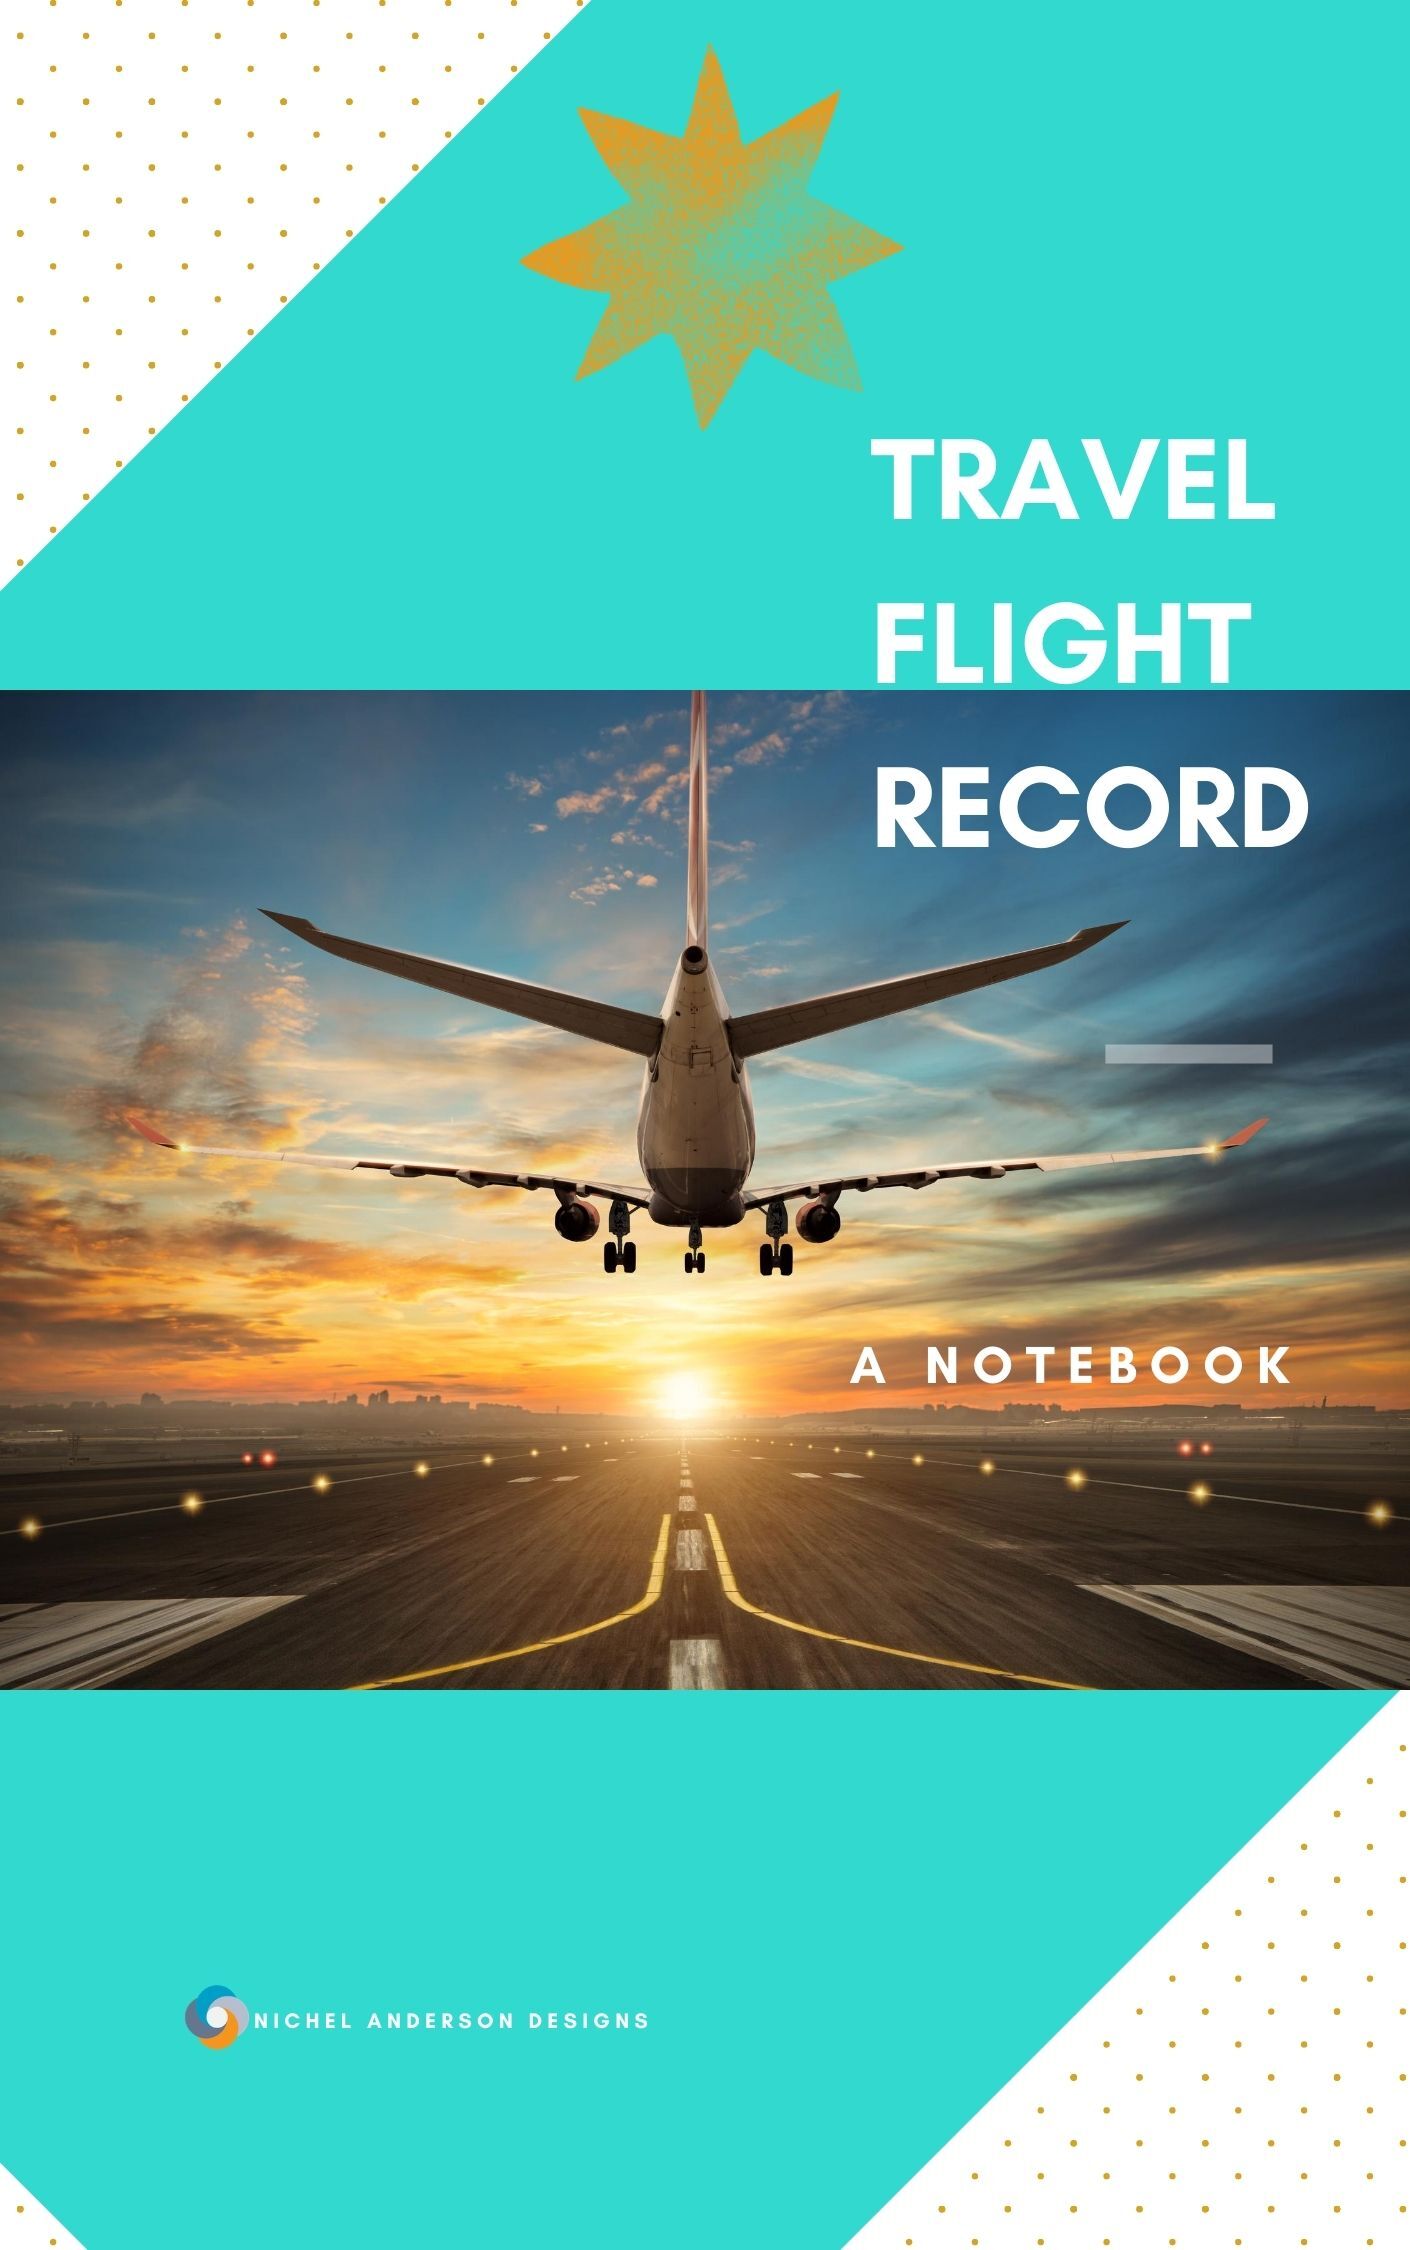 Flight_Record_Notebook9ci1w.jpg